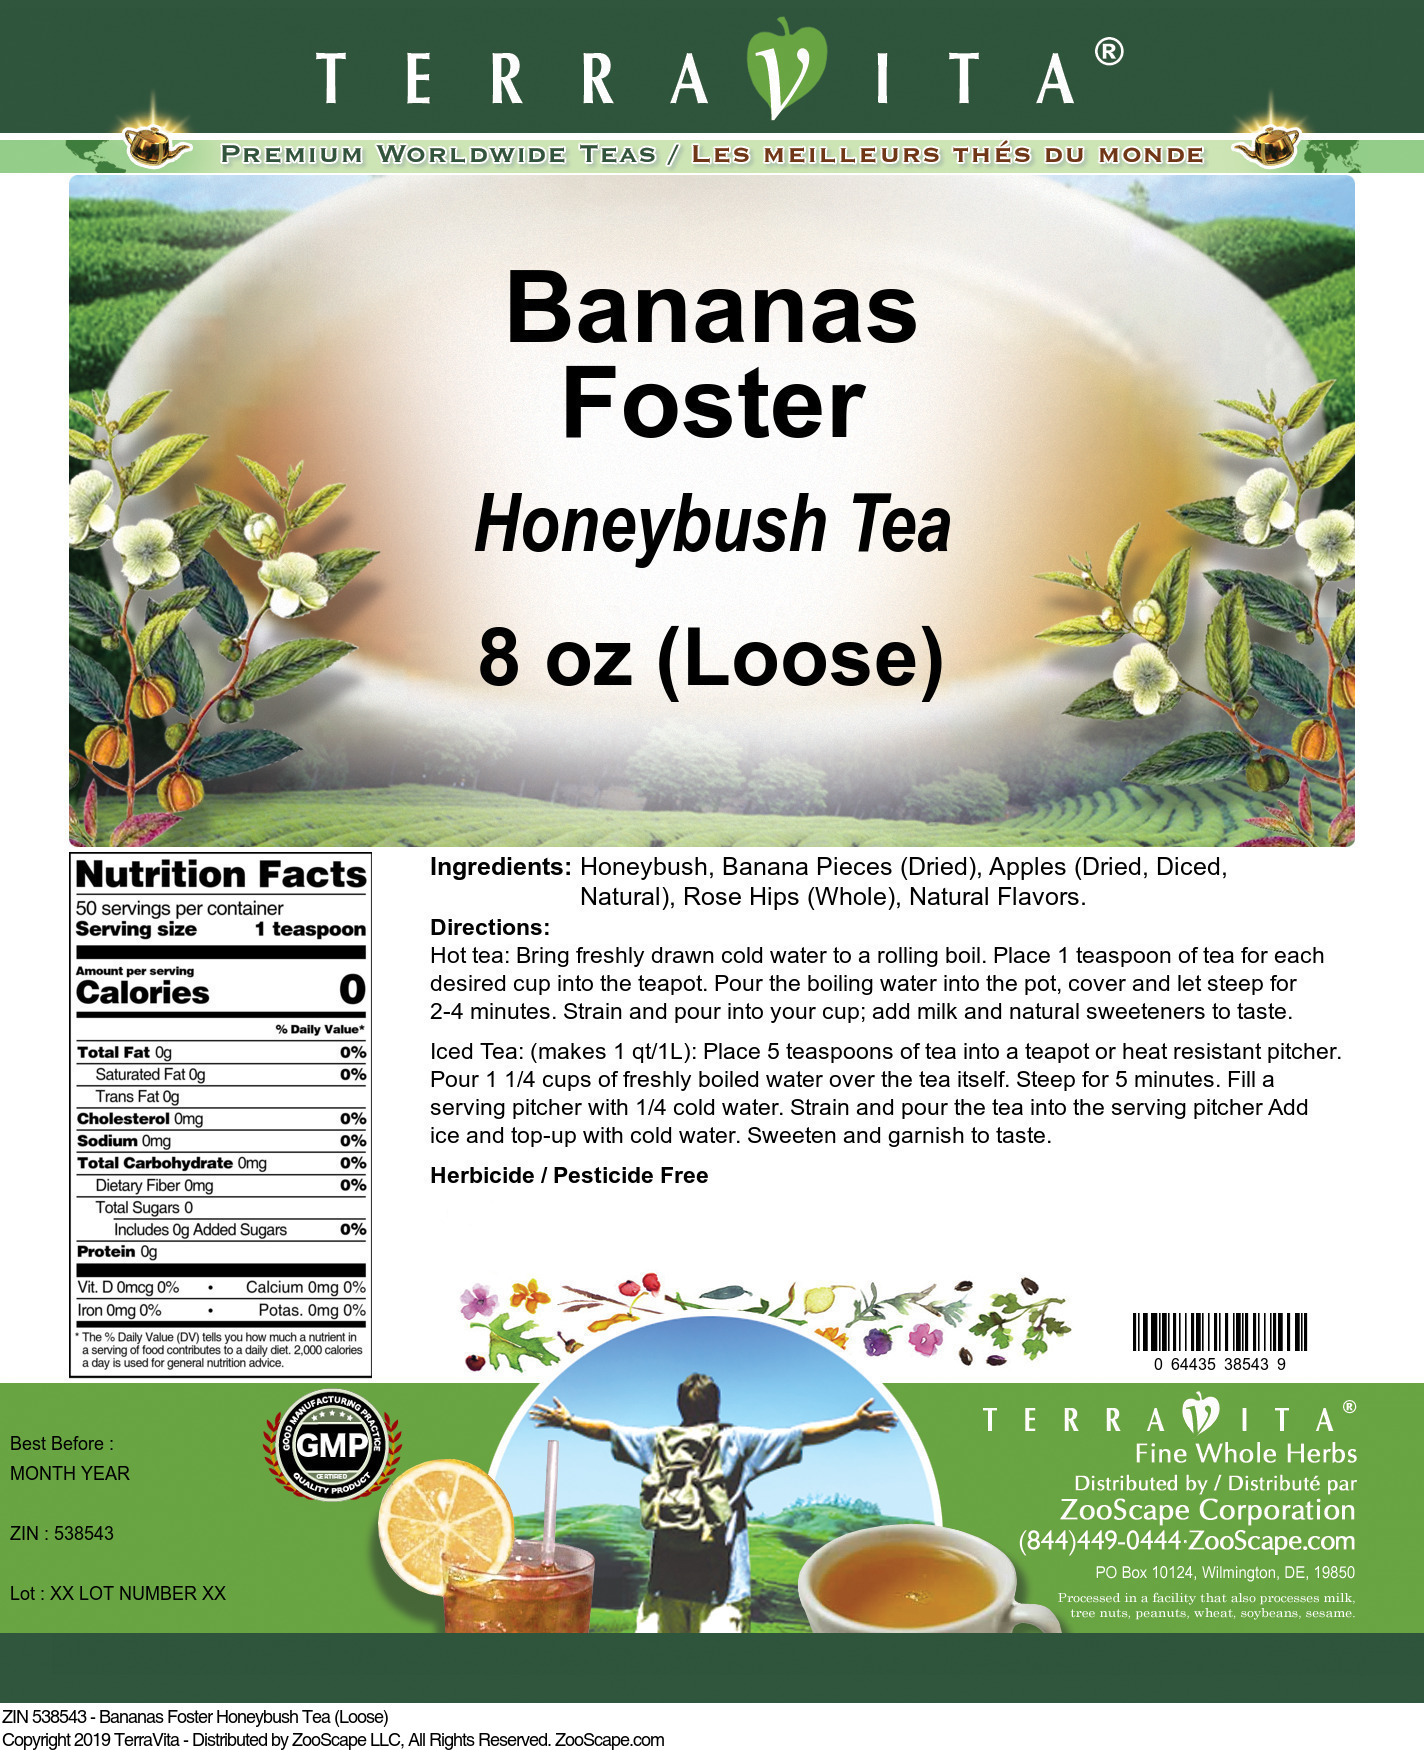 Bananas Foster Honeybush Tea (Loose) - Label